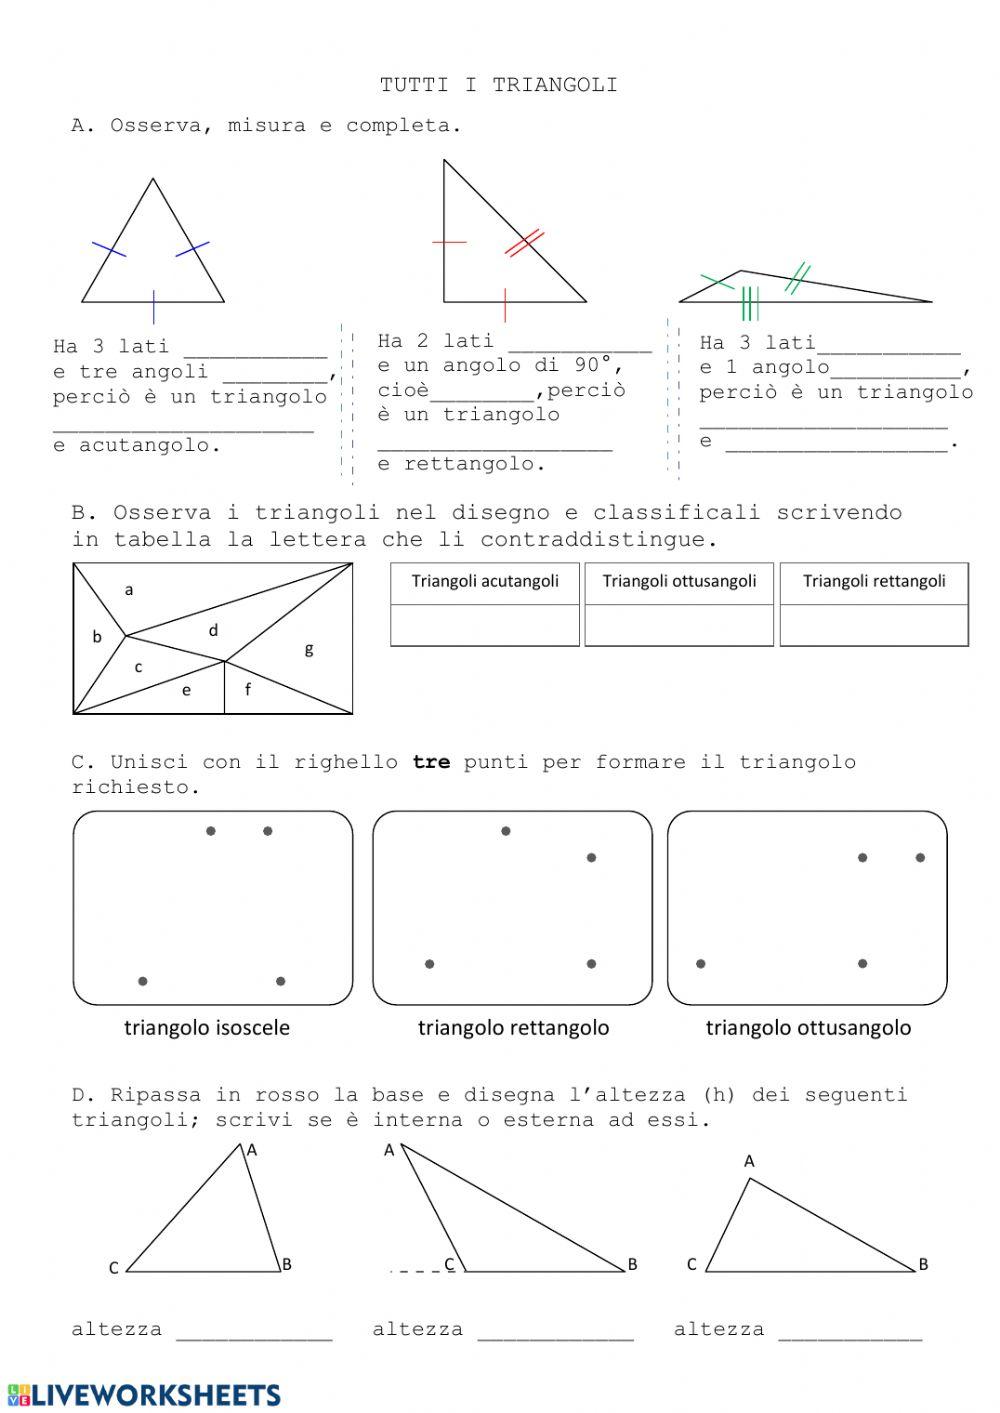 Tutti i triangoli